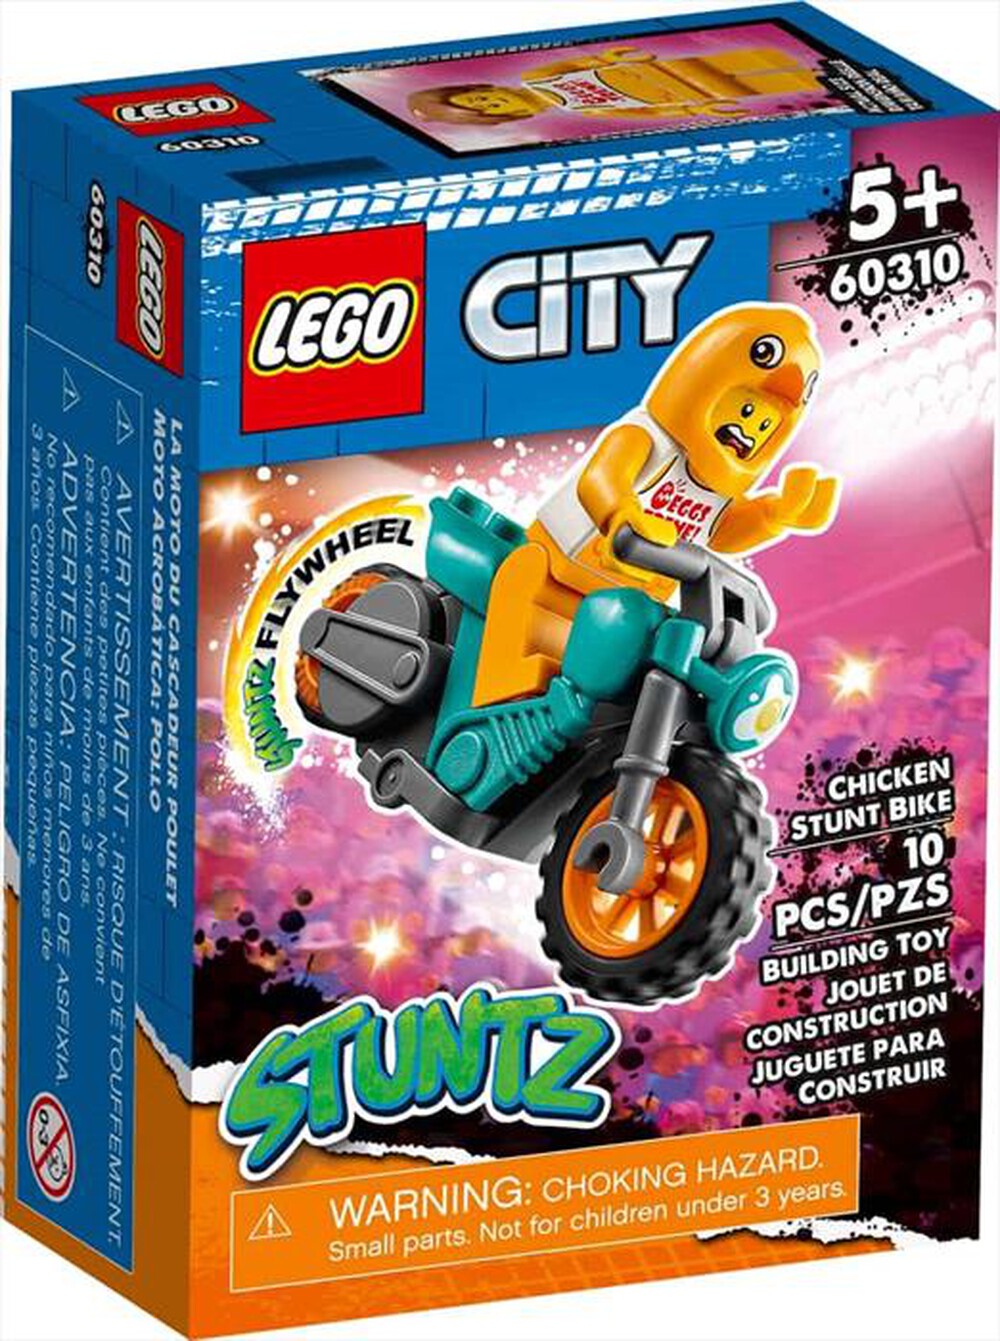 "LEGO - CITY STUNT BIKE - 60310"